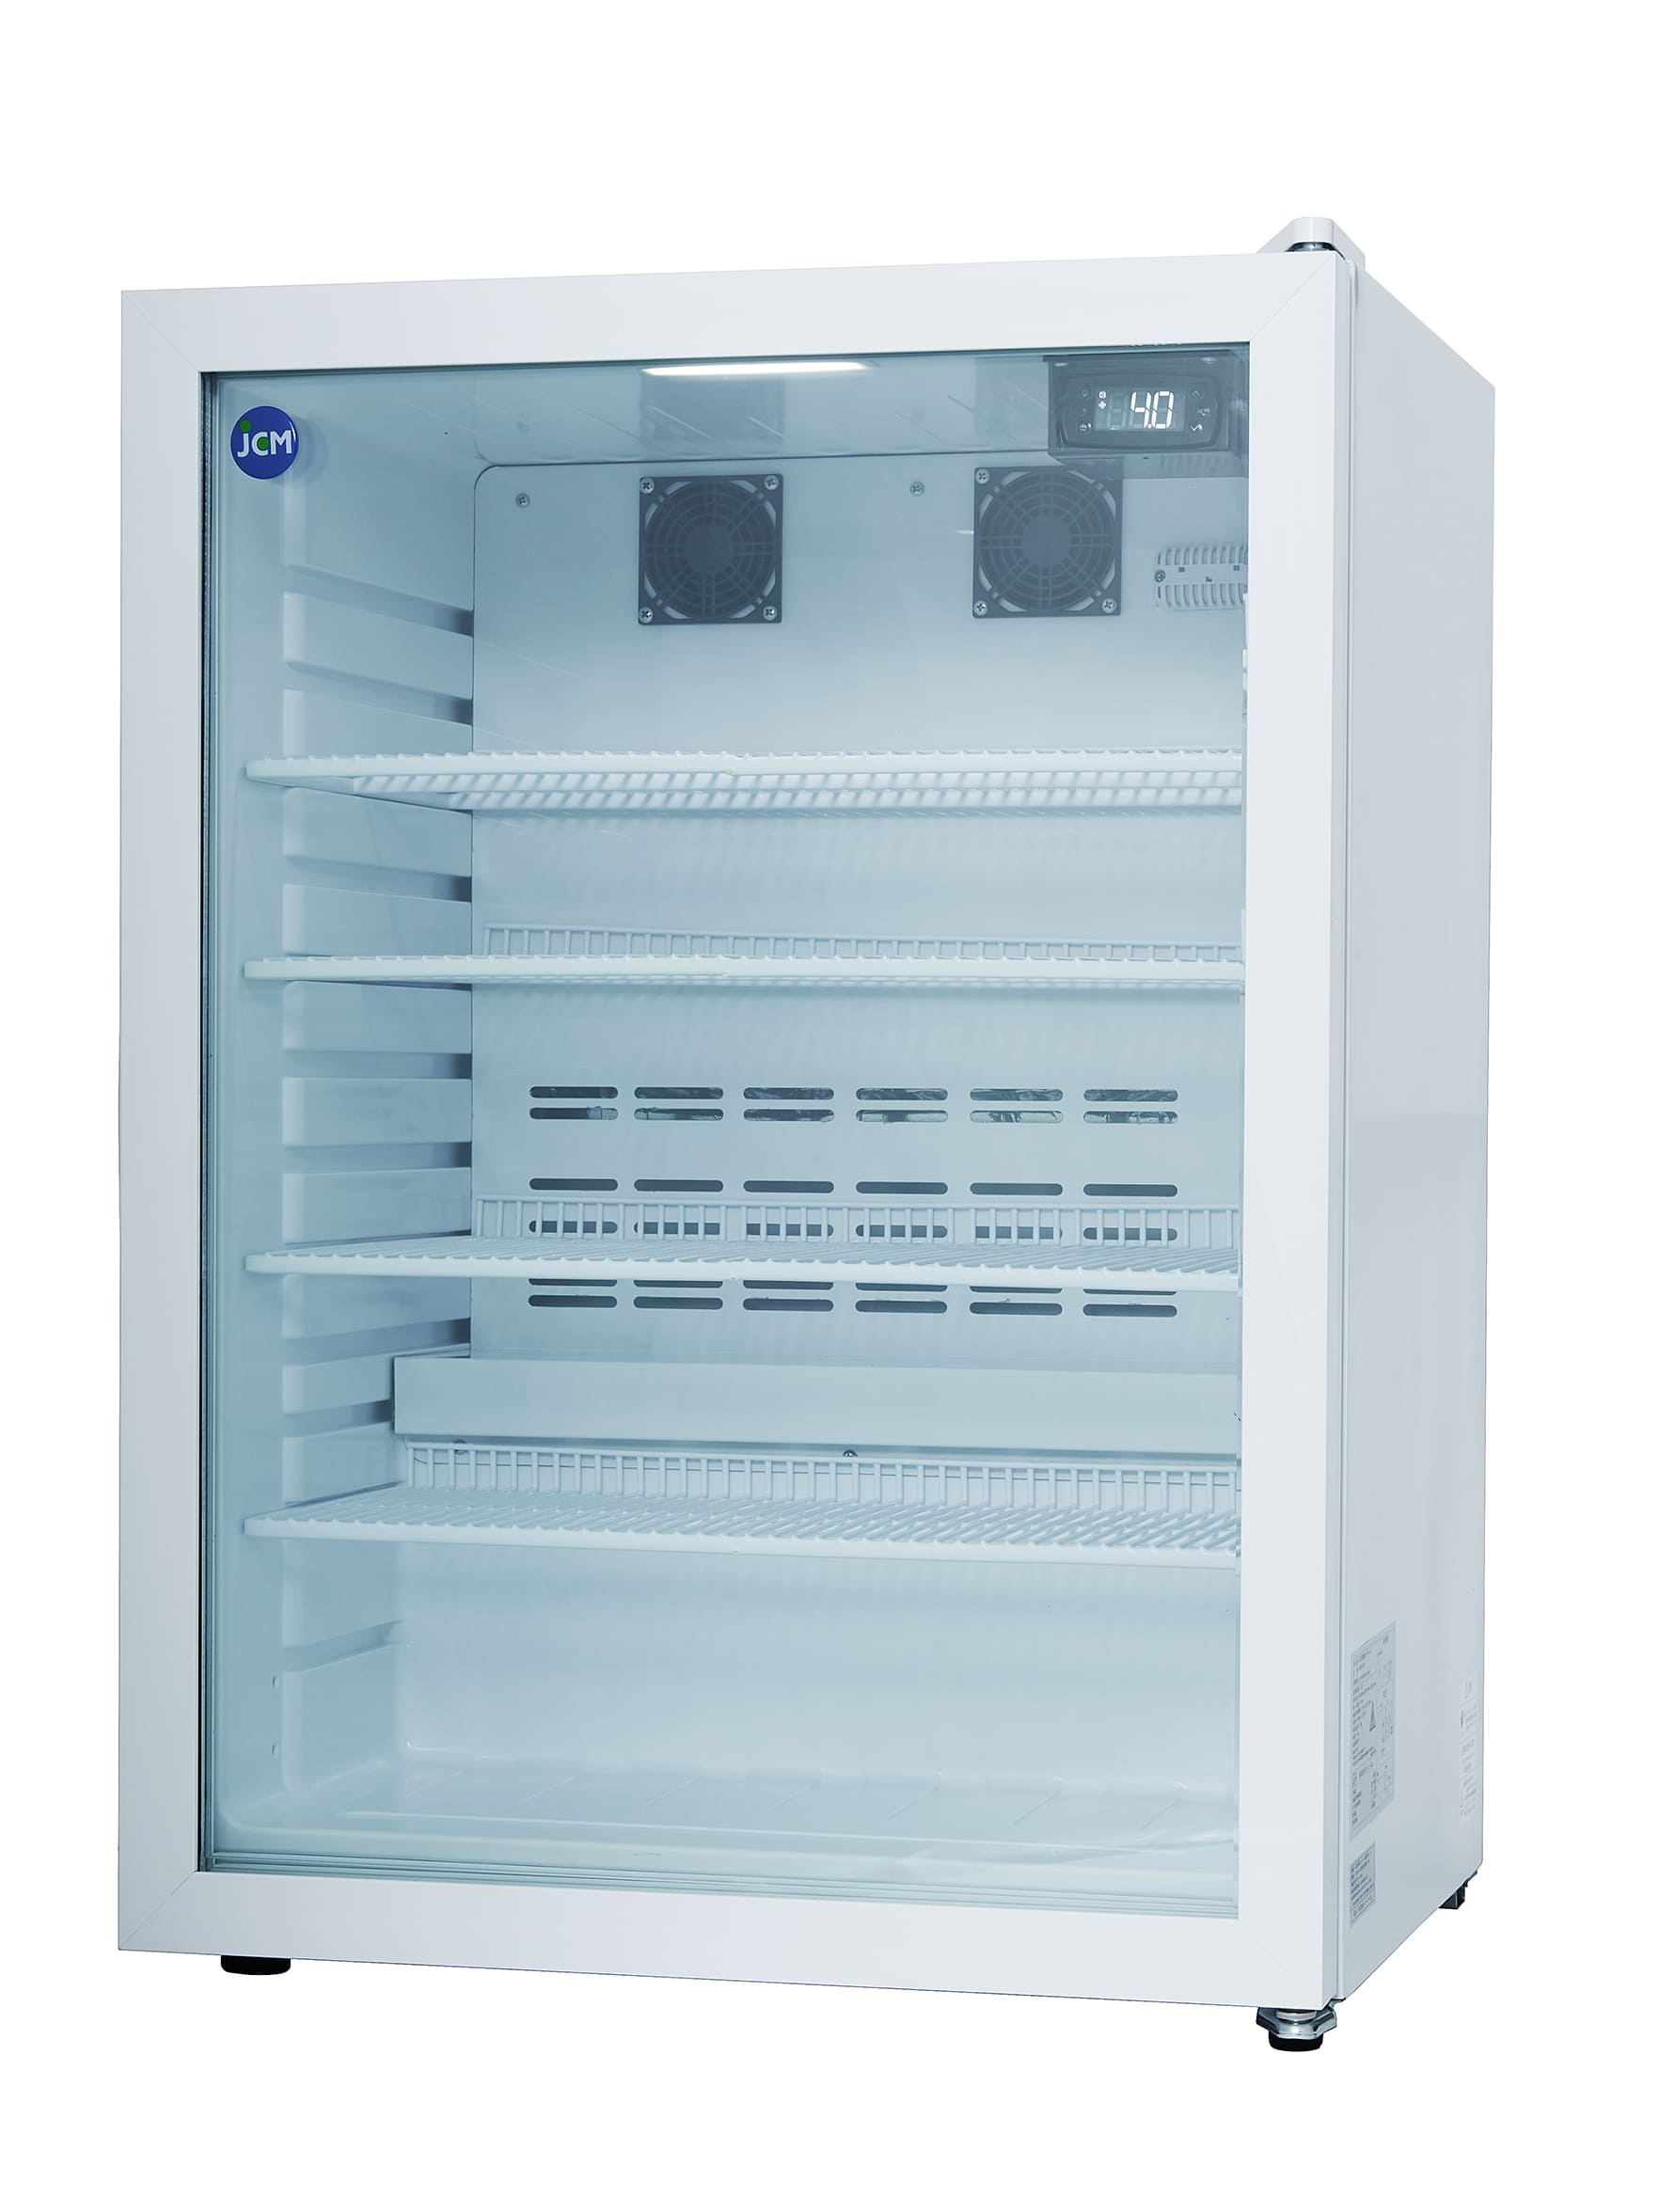 JCMS-66 -6℃～10℃ 卓上型冷蔵ショーケース／幅425×奥行500